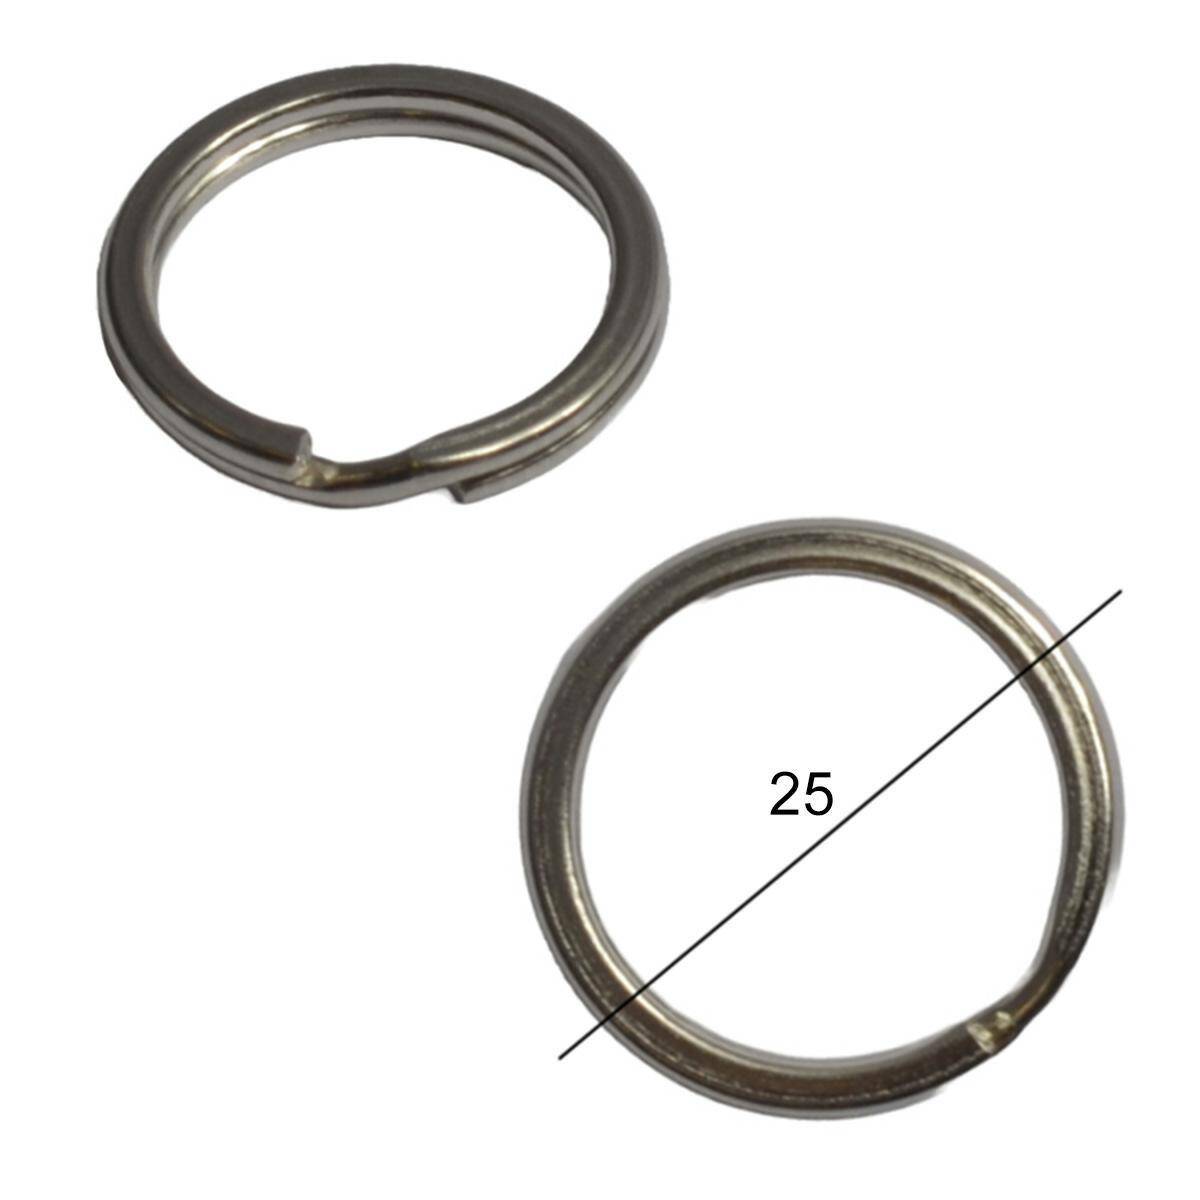 Key rings - flat - 25 mm